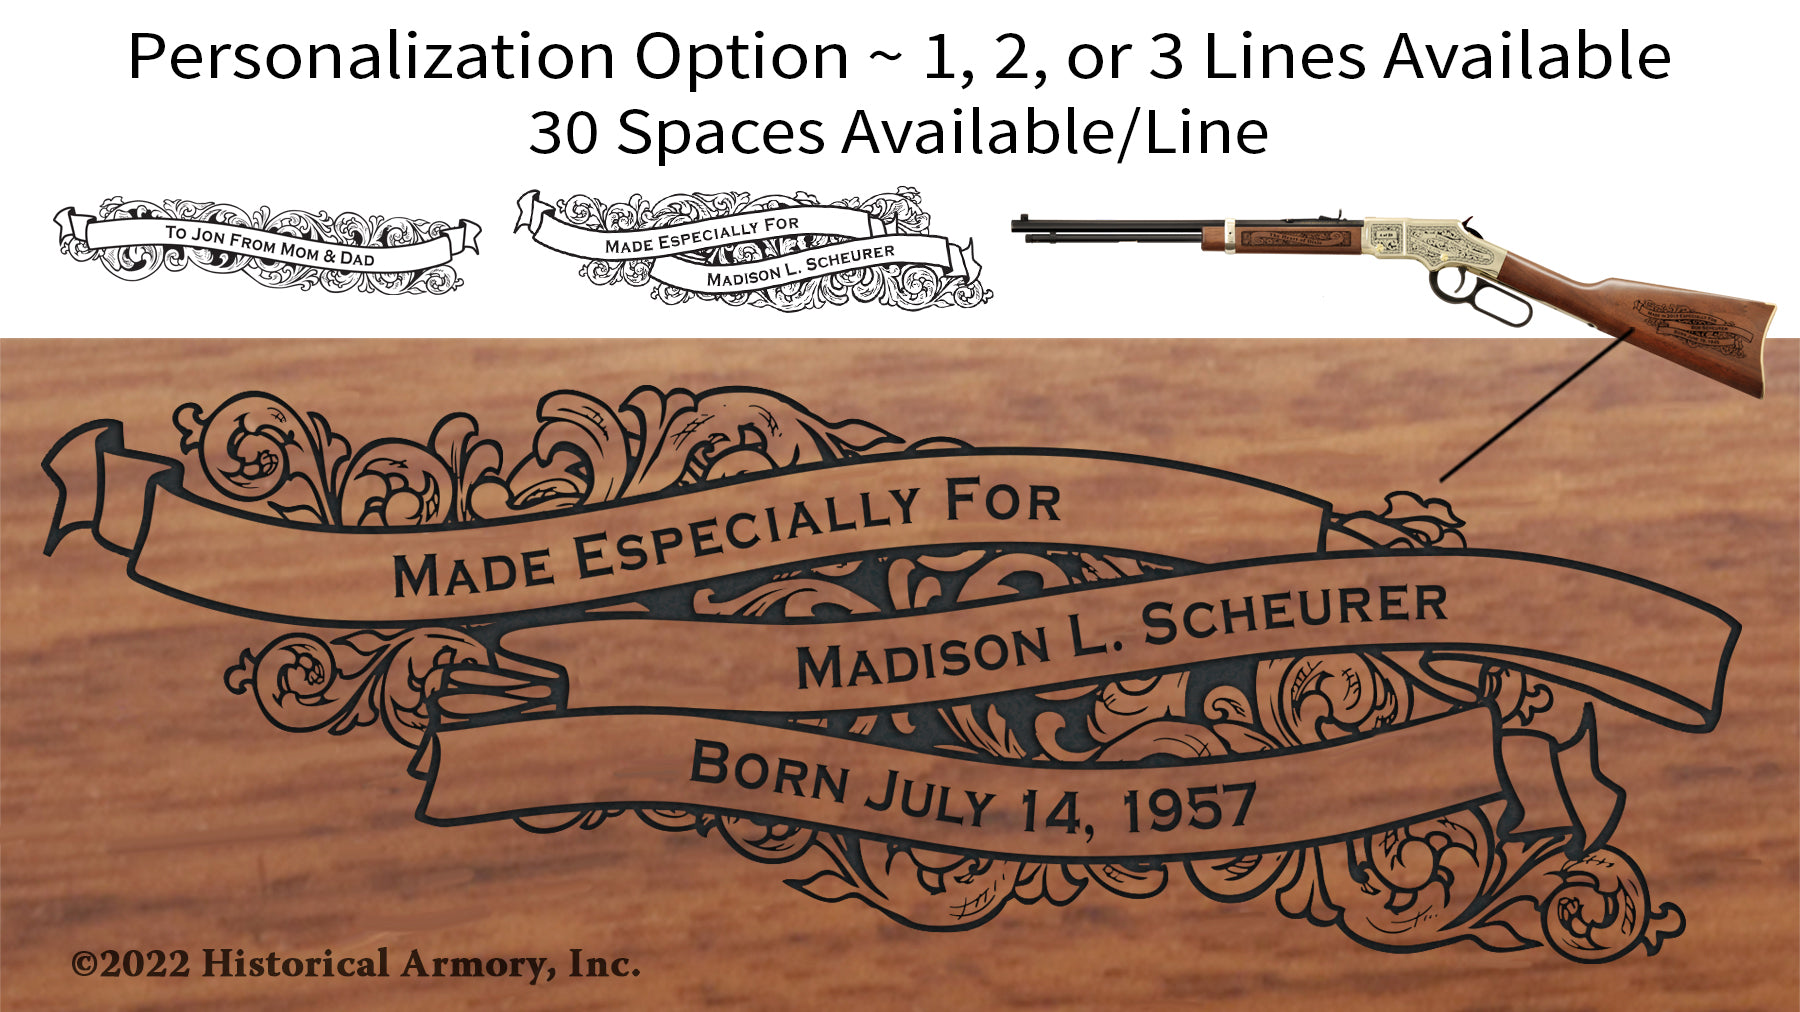 Pinal County Arizona Engraved Rifle Personalization